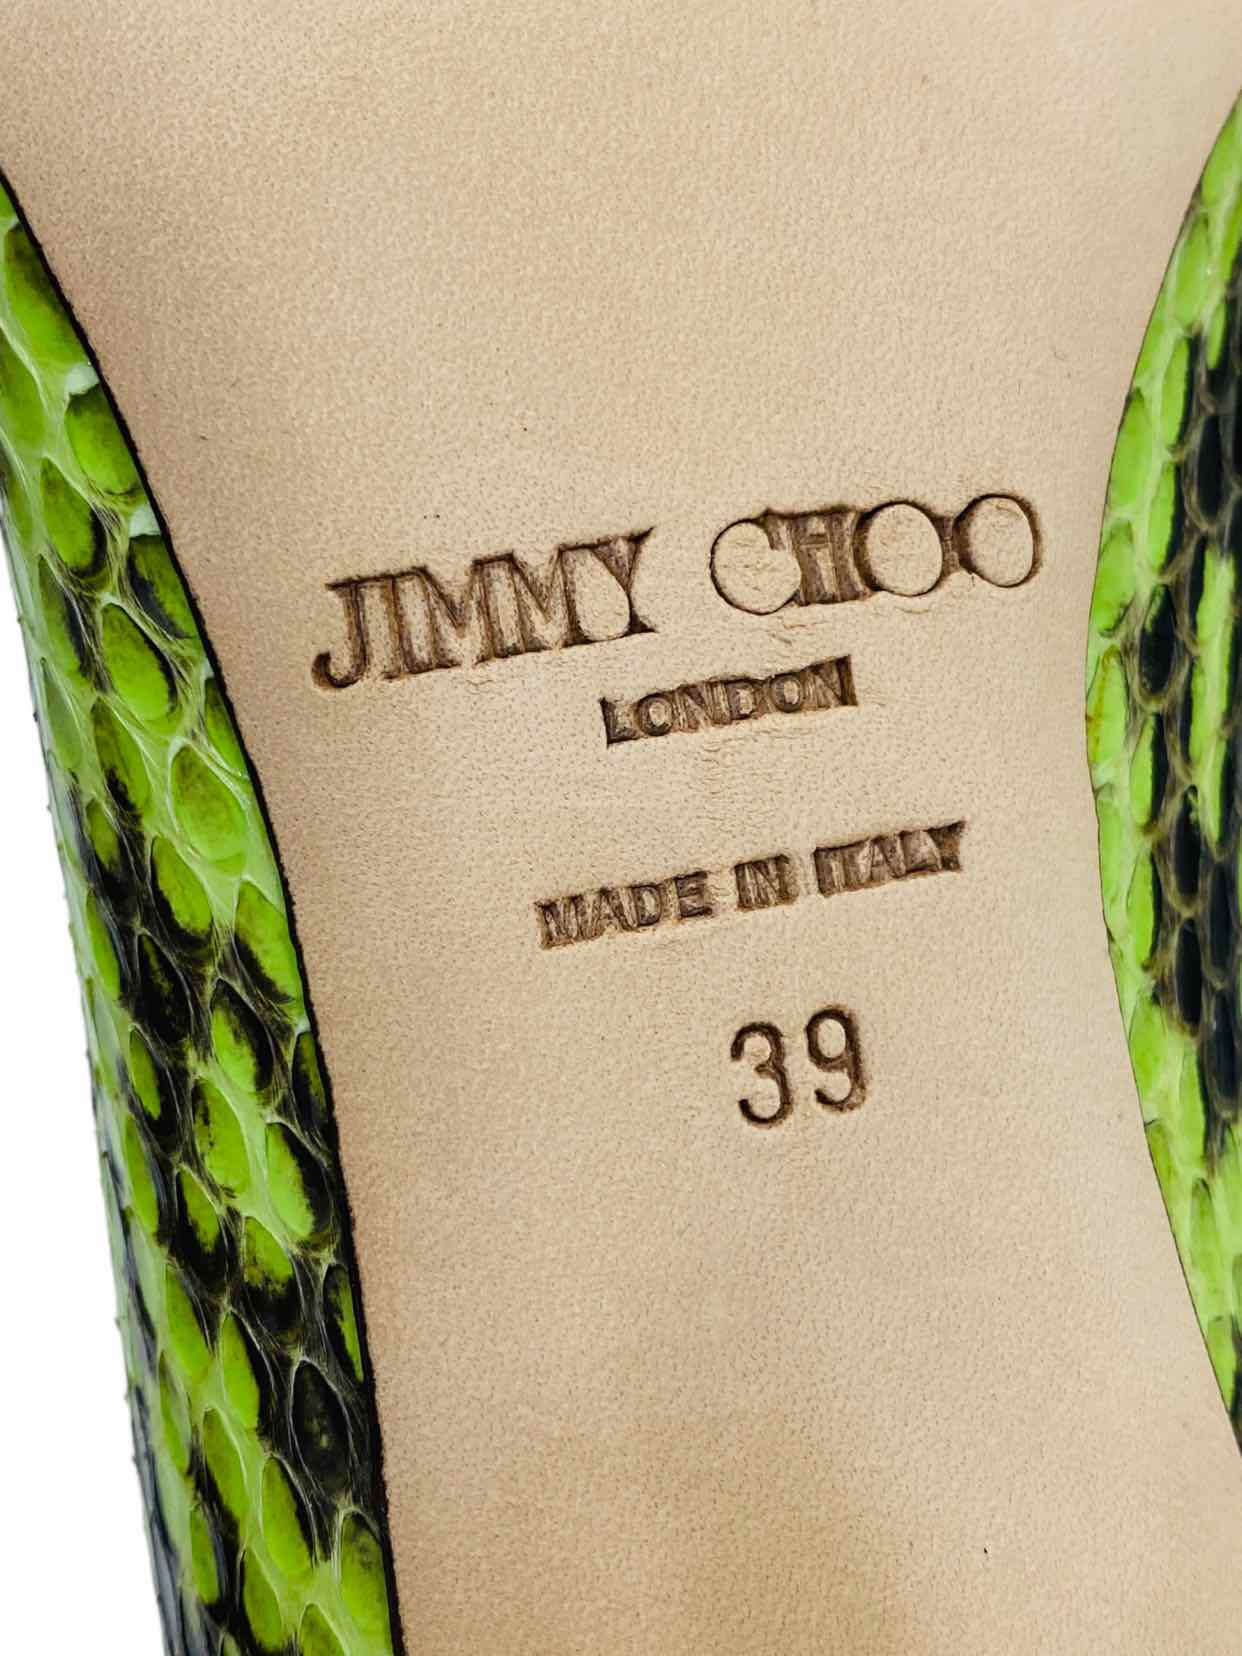 JIMMY CHOO Pointed Toe Lime Green & Black Pumps